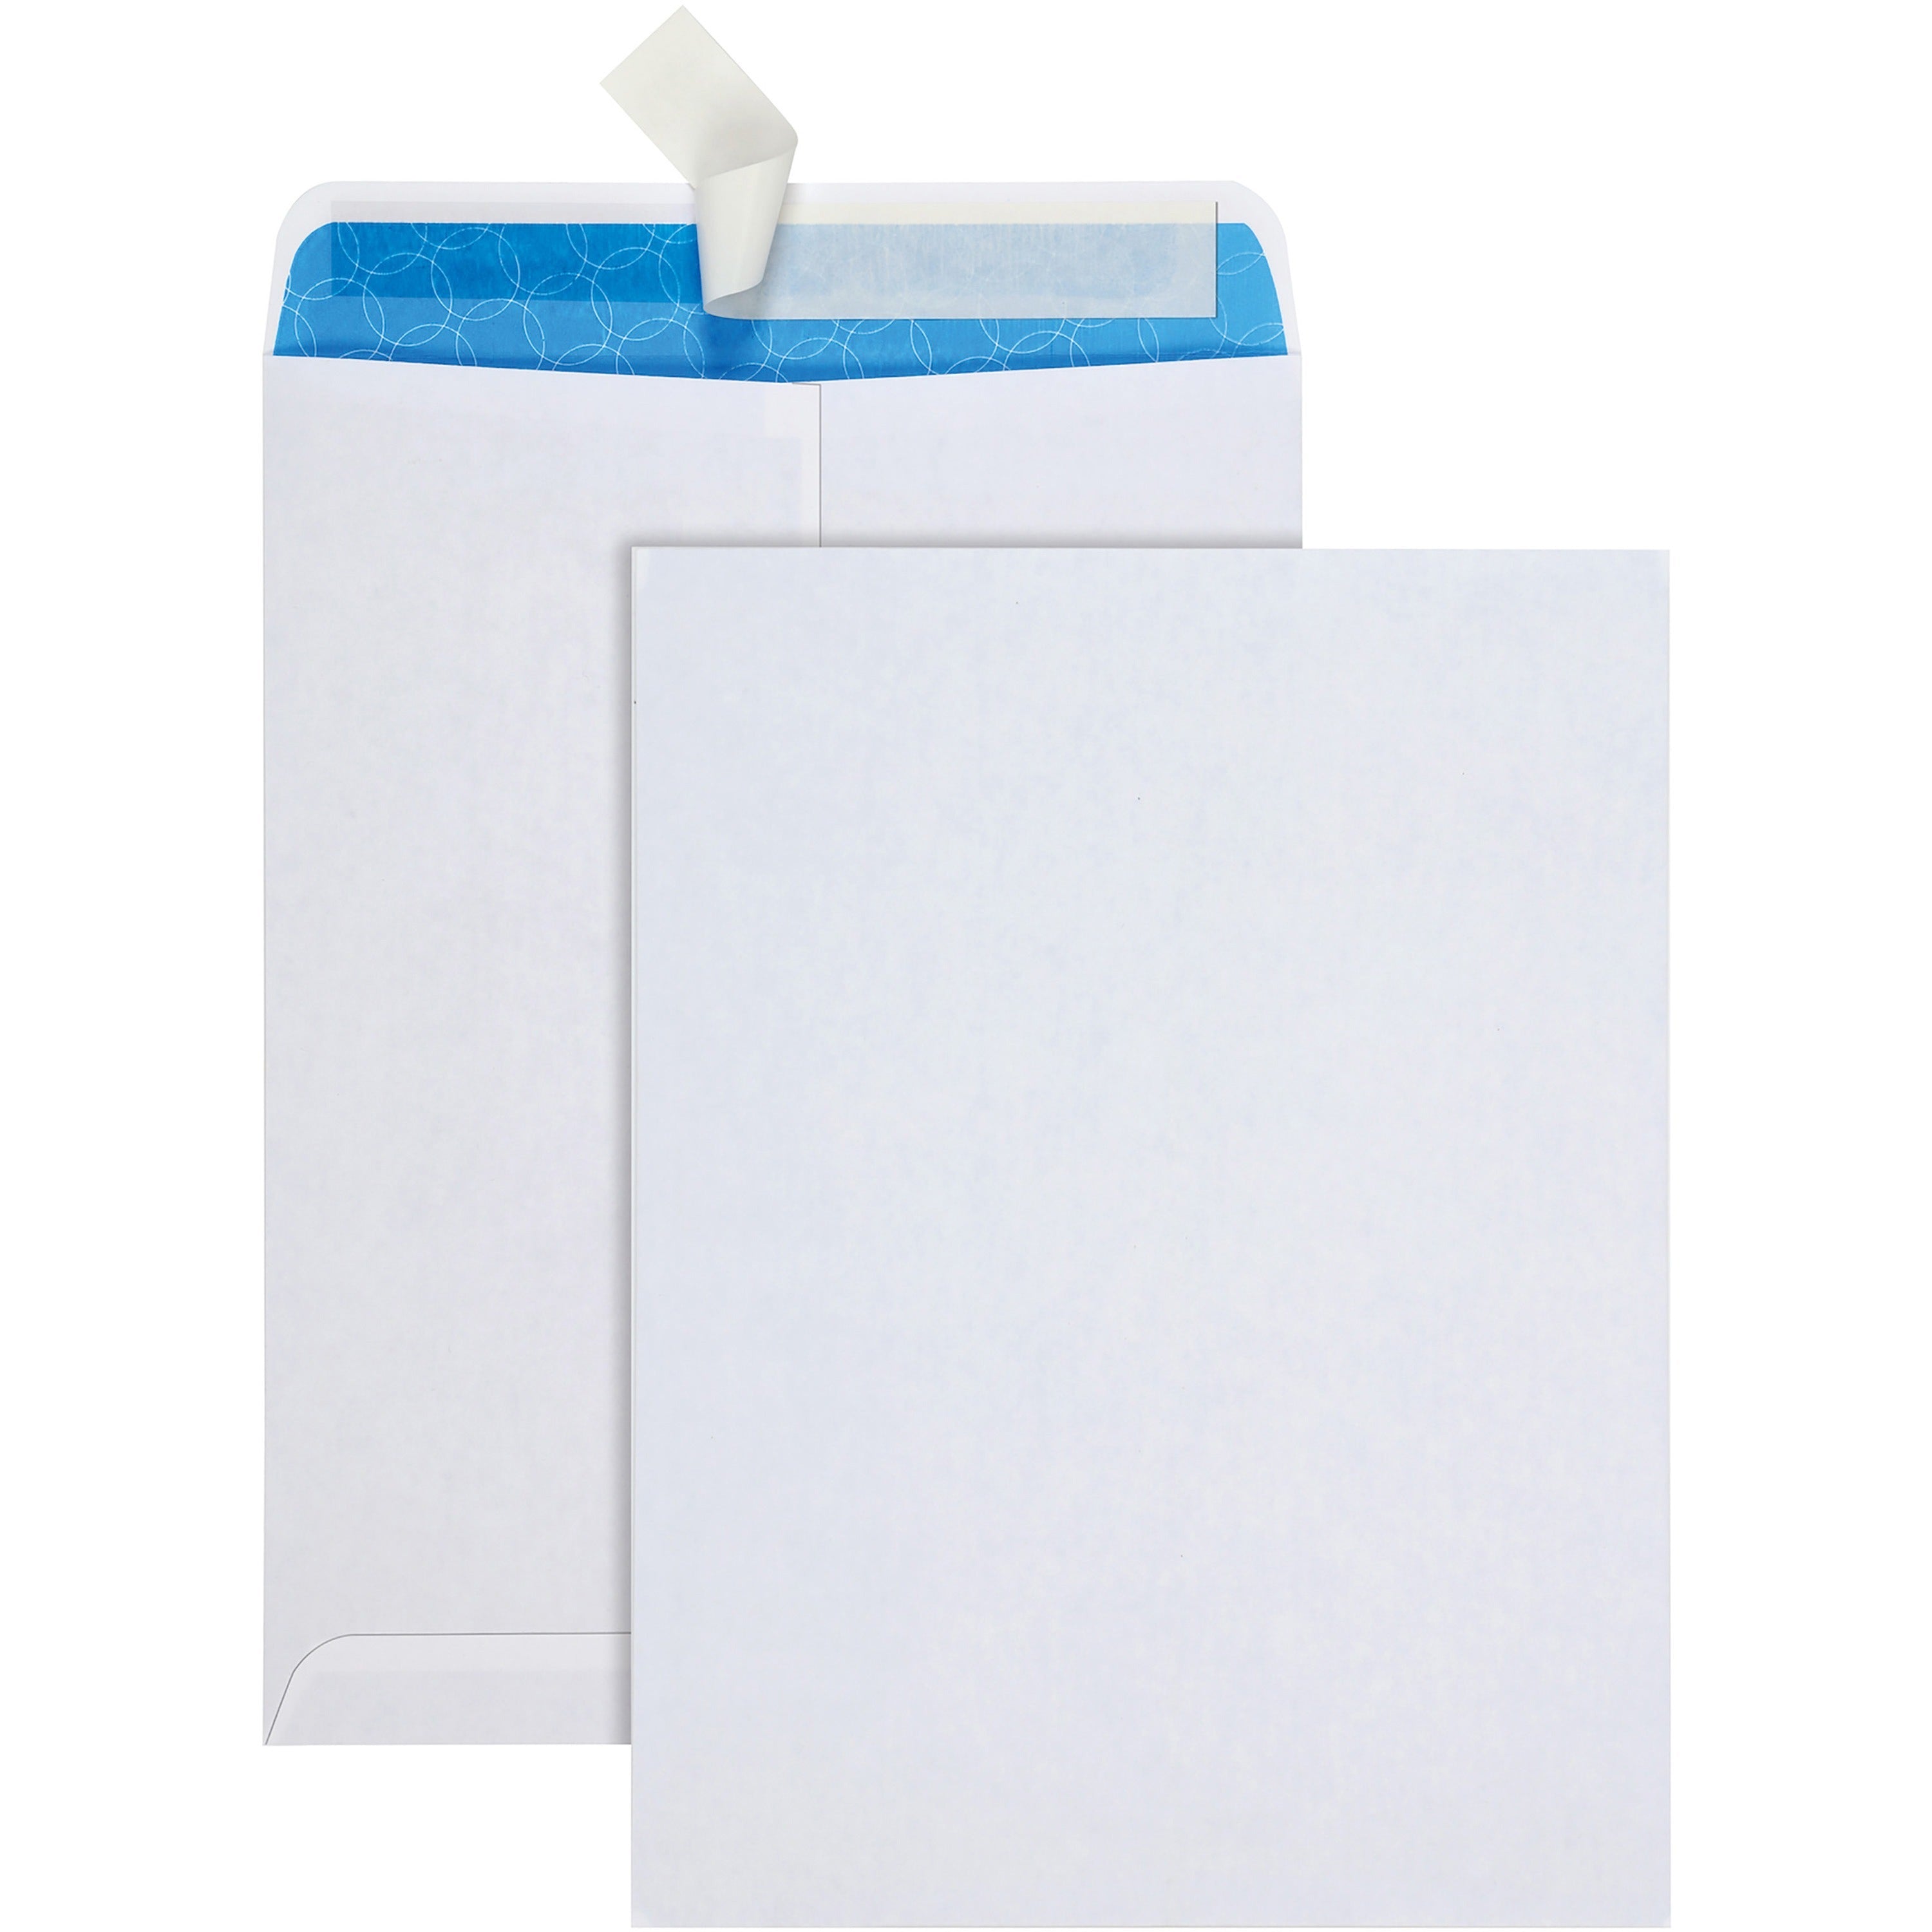 quality-park-9-x-12-treated-security-tinted-catalog-envelopes-with-redi-strip-closure-catalog-9-width-x-12-length-28-lb-flap-100-box-white_qua41415r - 1